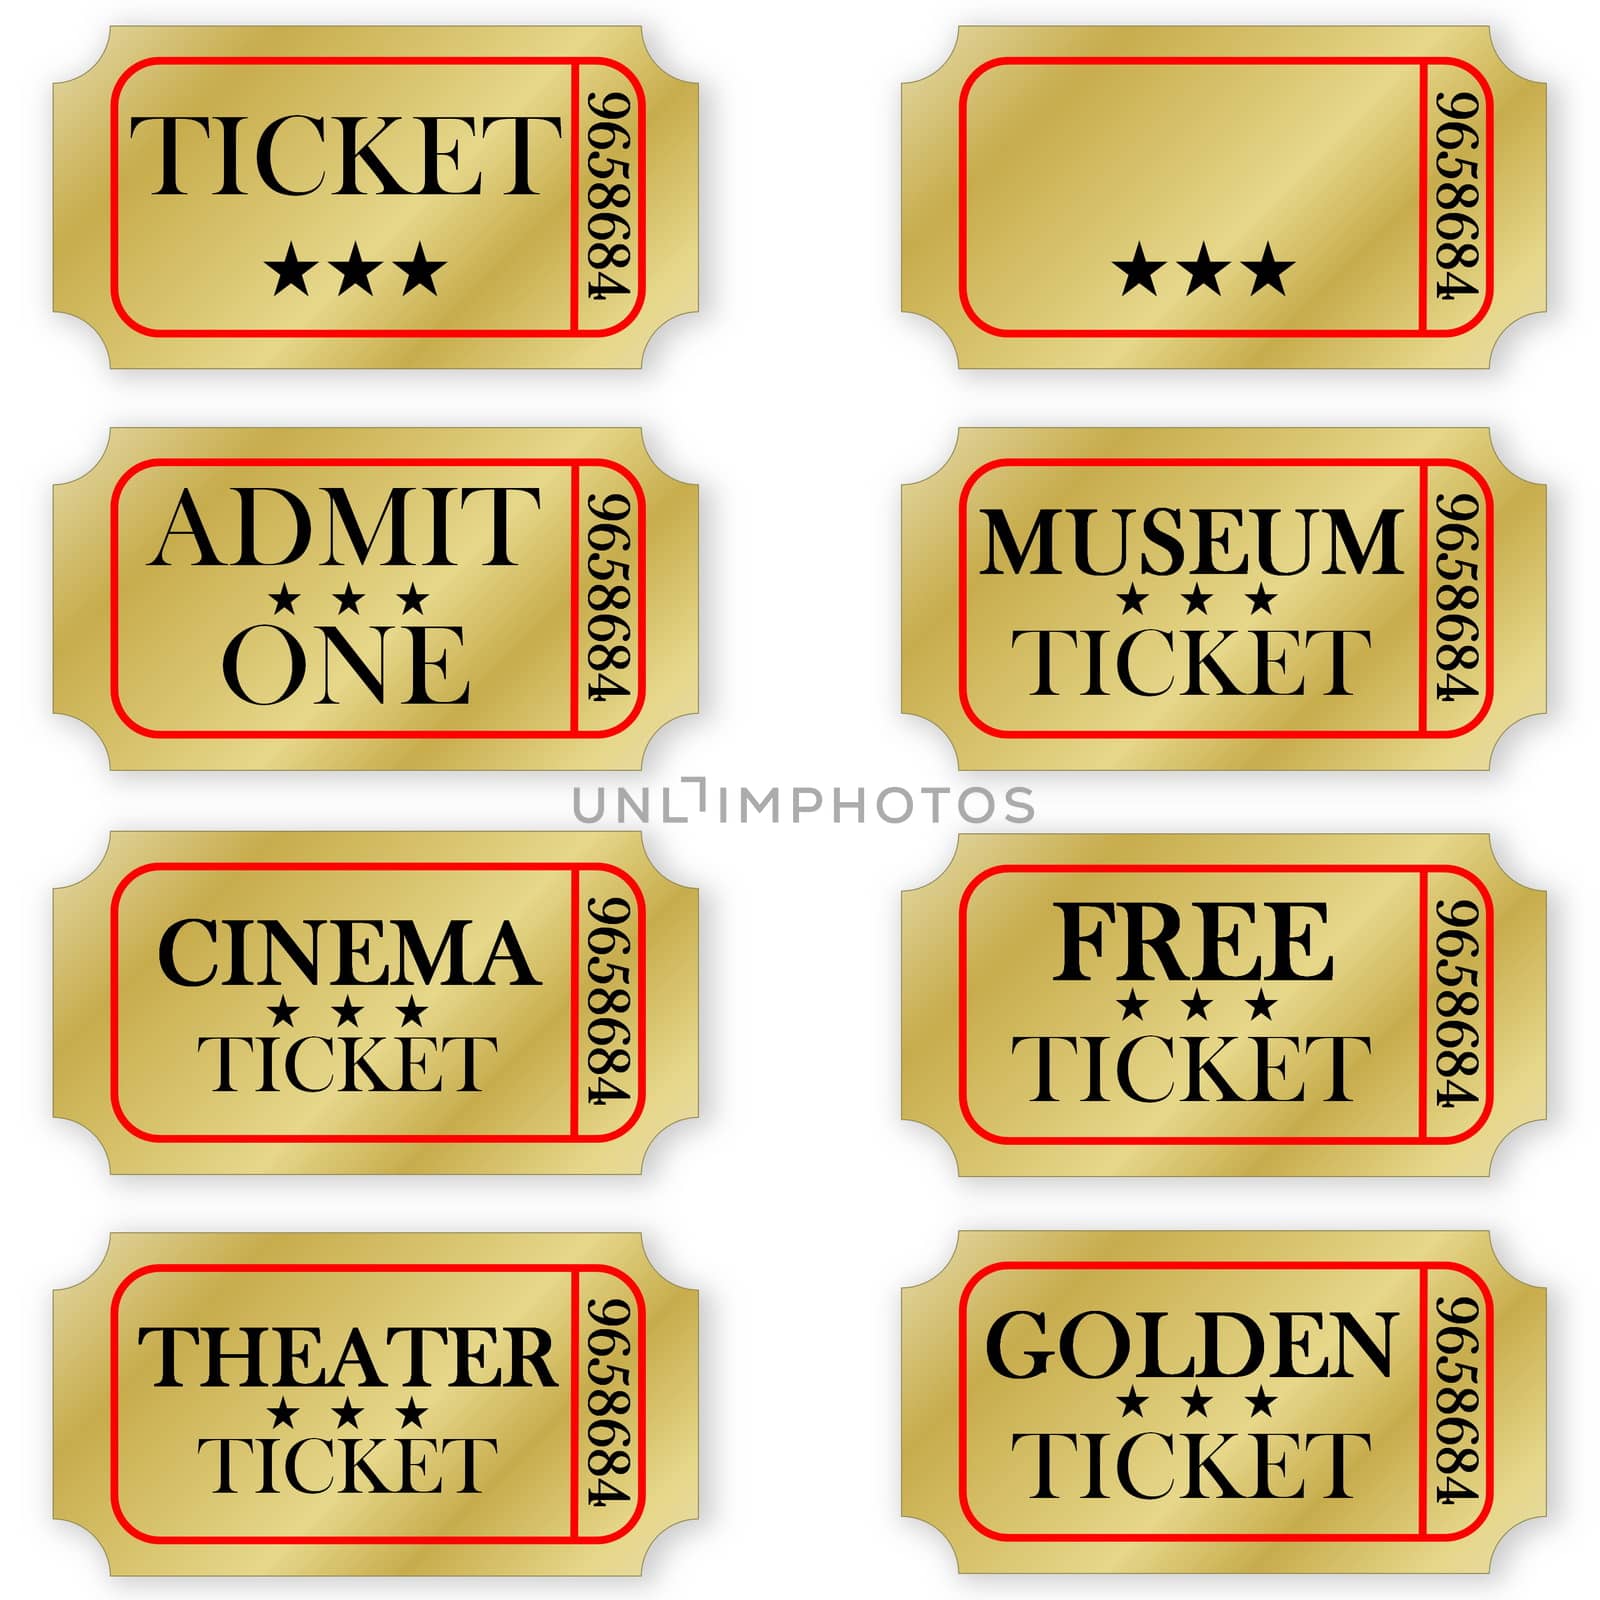 Golden tickets by Elenaphotos21